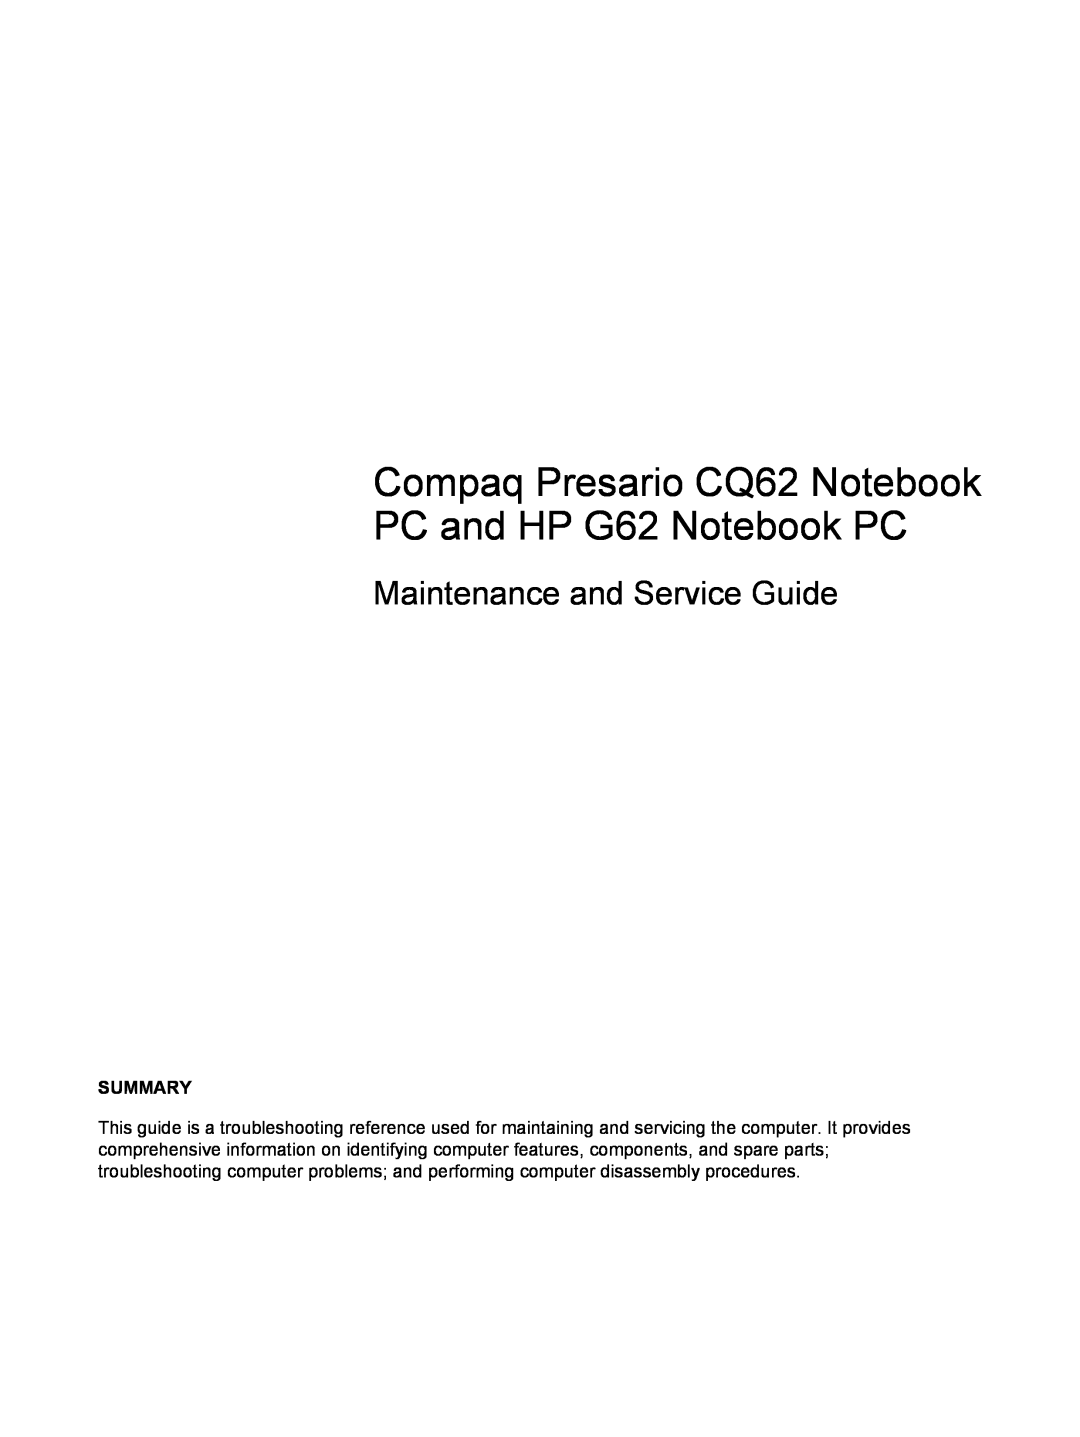 HP CQ62z-300, CQ62-411NR manual Notebook Essentials 